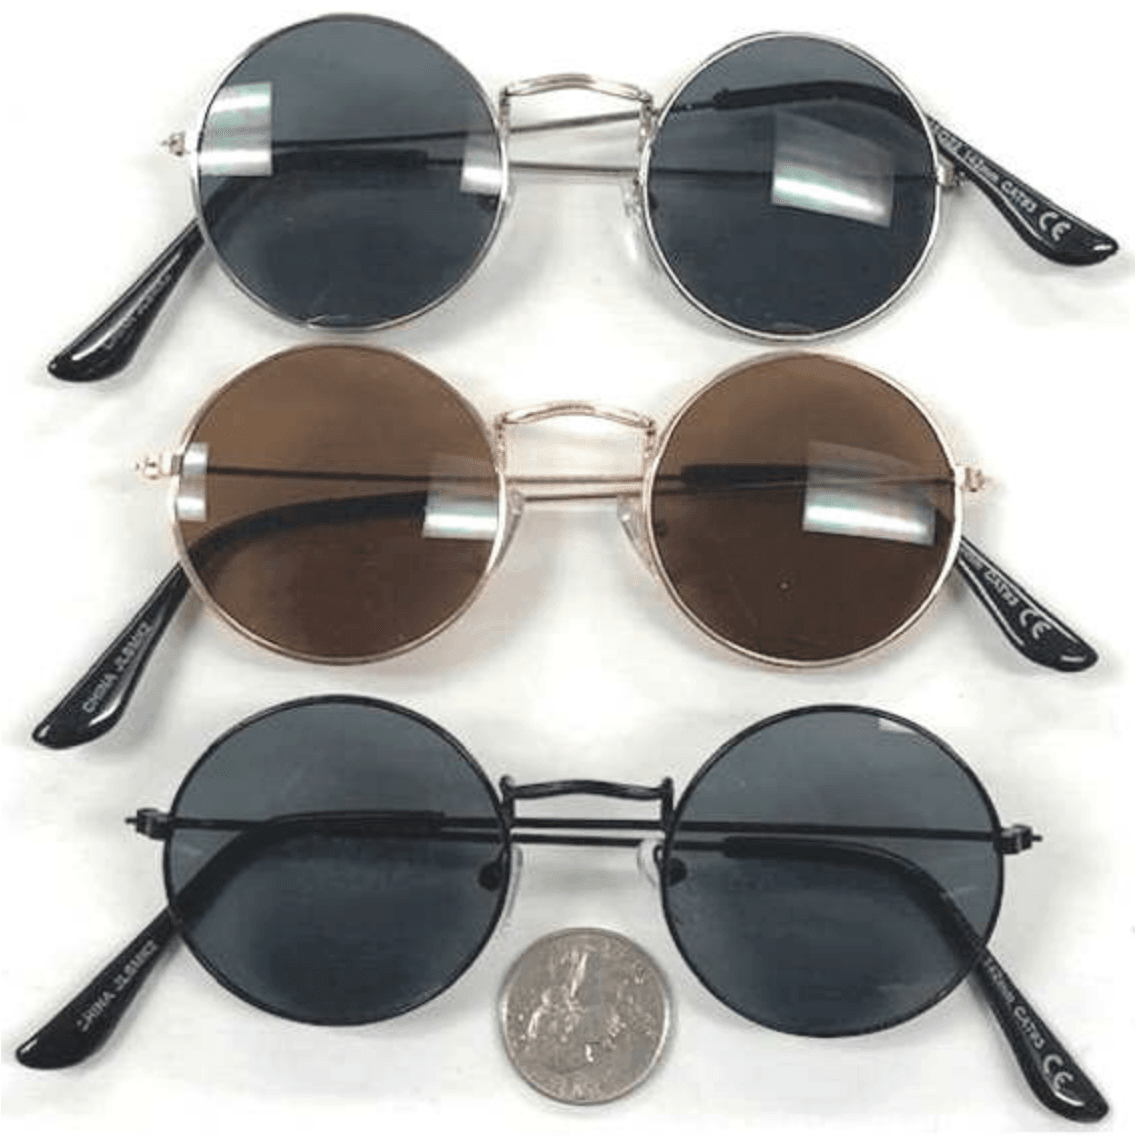 Lennon Style Sunglasses With Dark Lens (Gold, Silver, & Black)